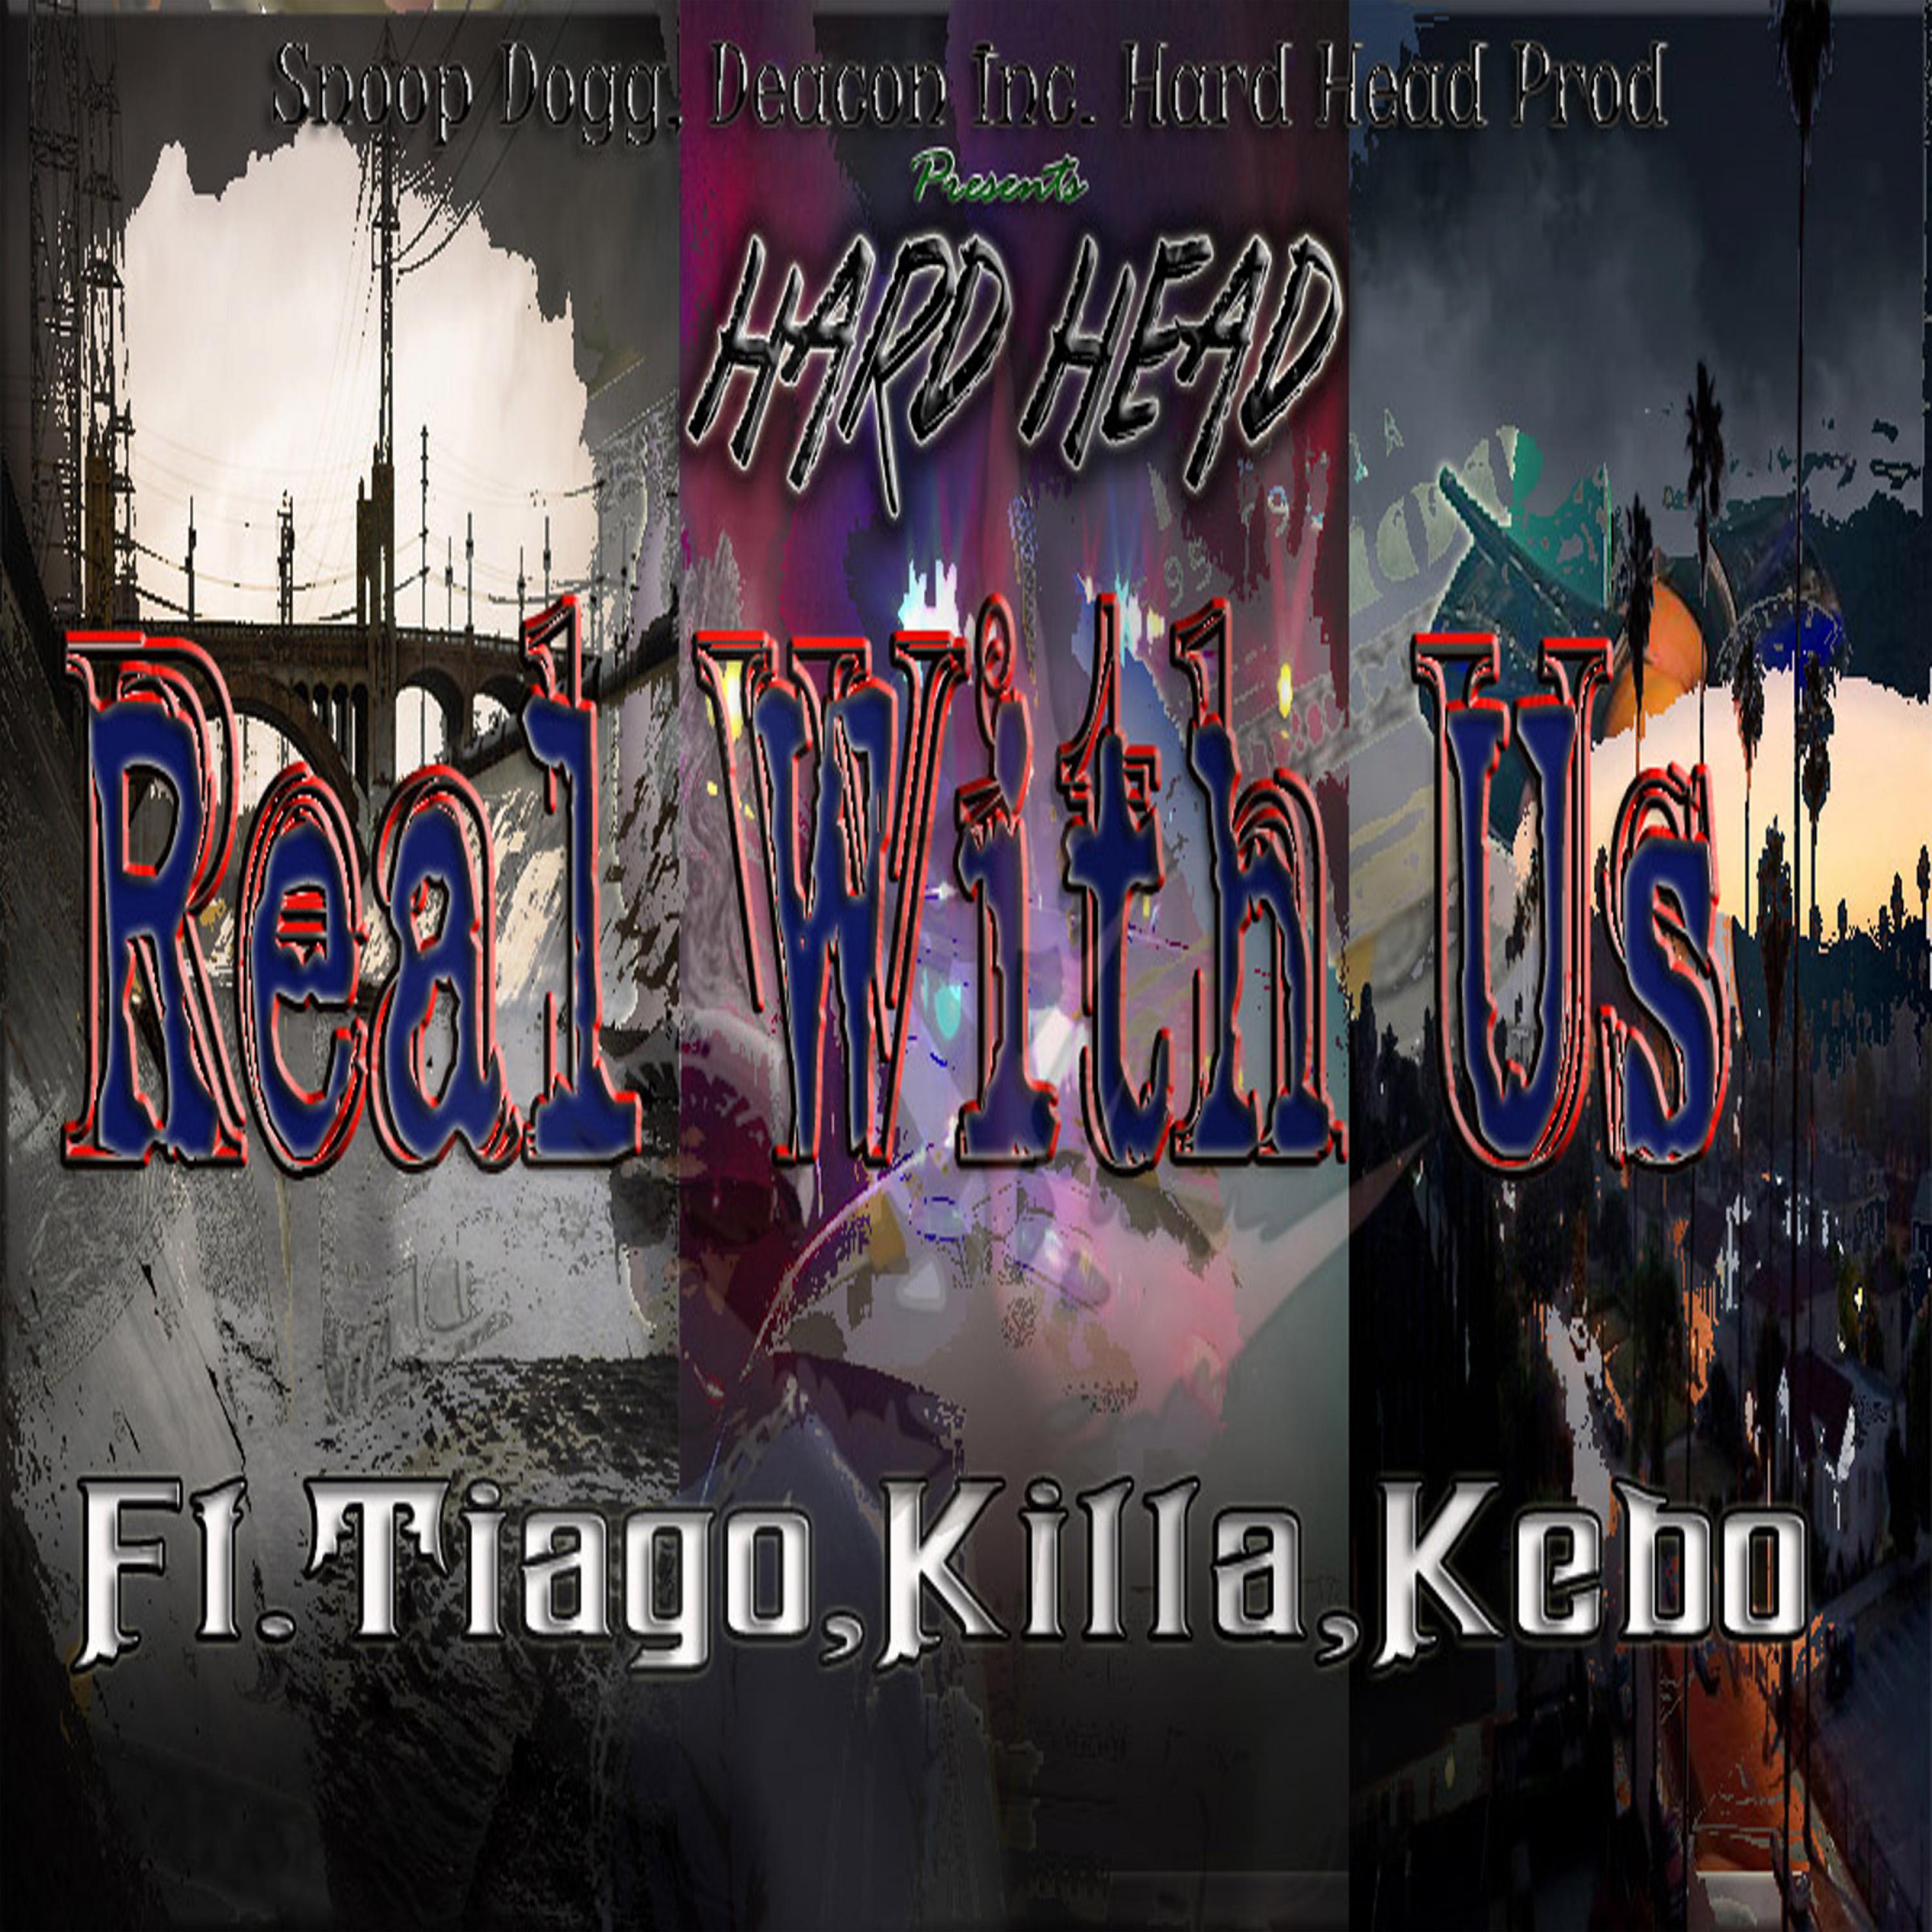 Real with Us (feat. Tiago, Killa & Kebo)